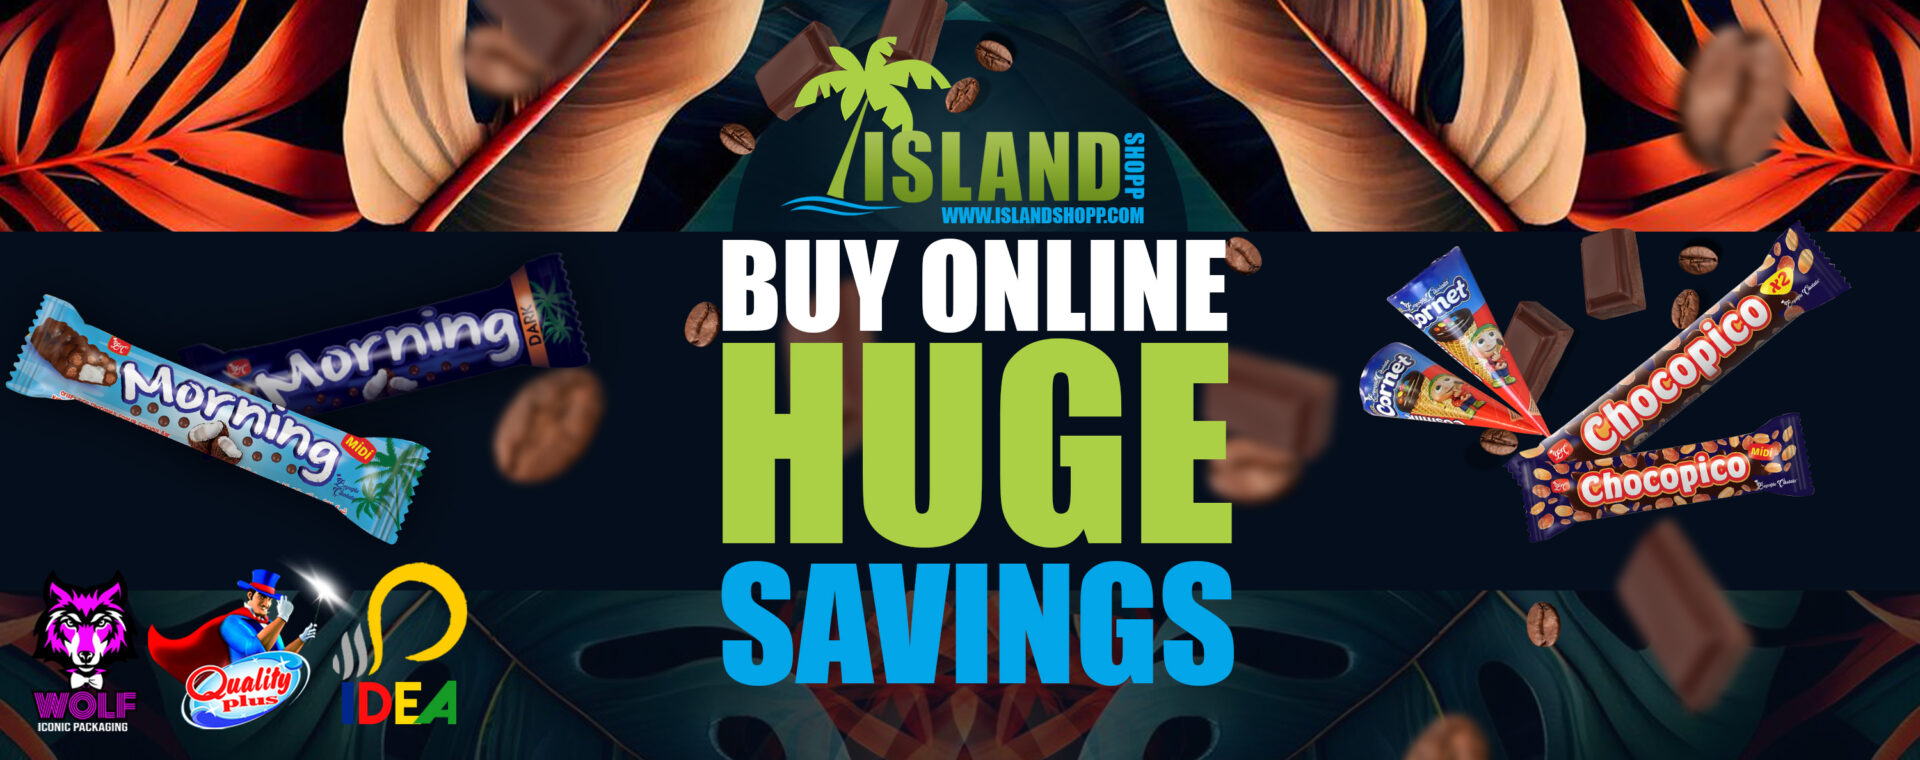 Buy onlin,e, save big - Islandshopp